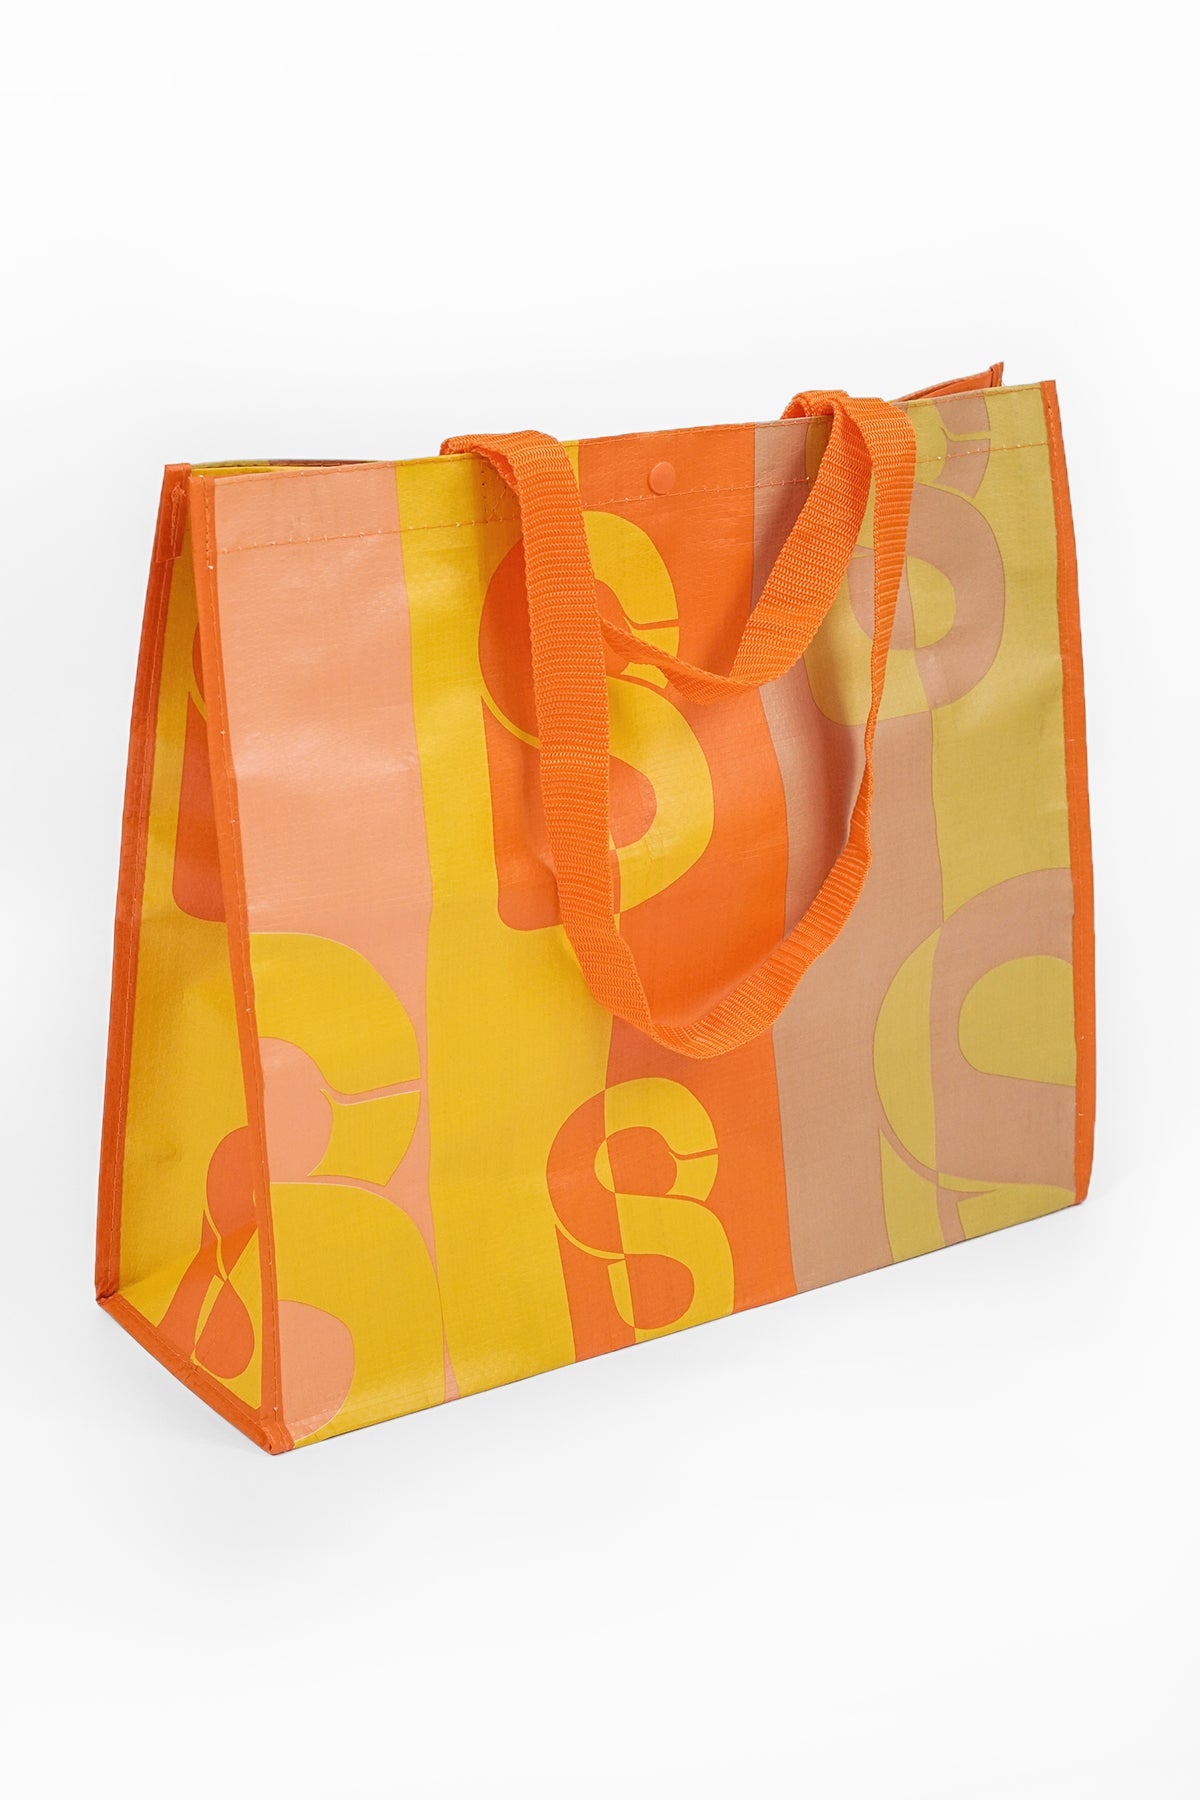 Jual BUTTONSCARVES ORIGINAL STORE 100% - Today Shopping Bag di